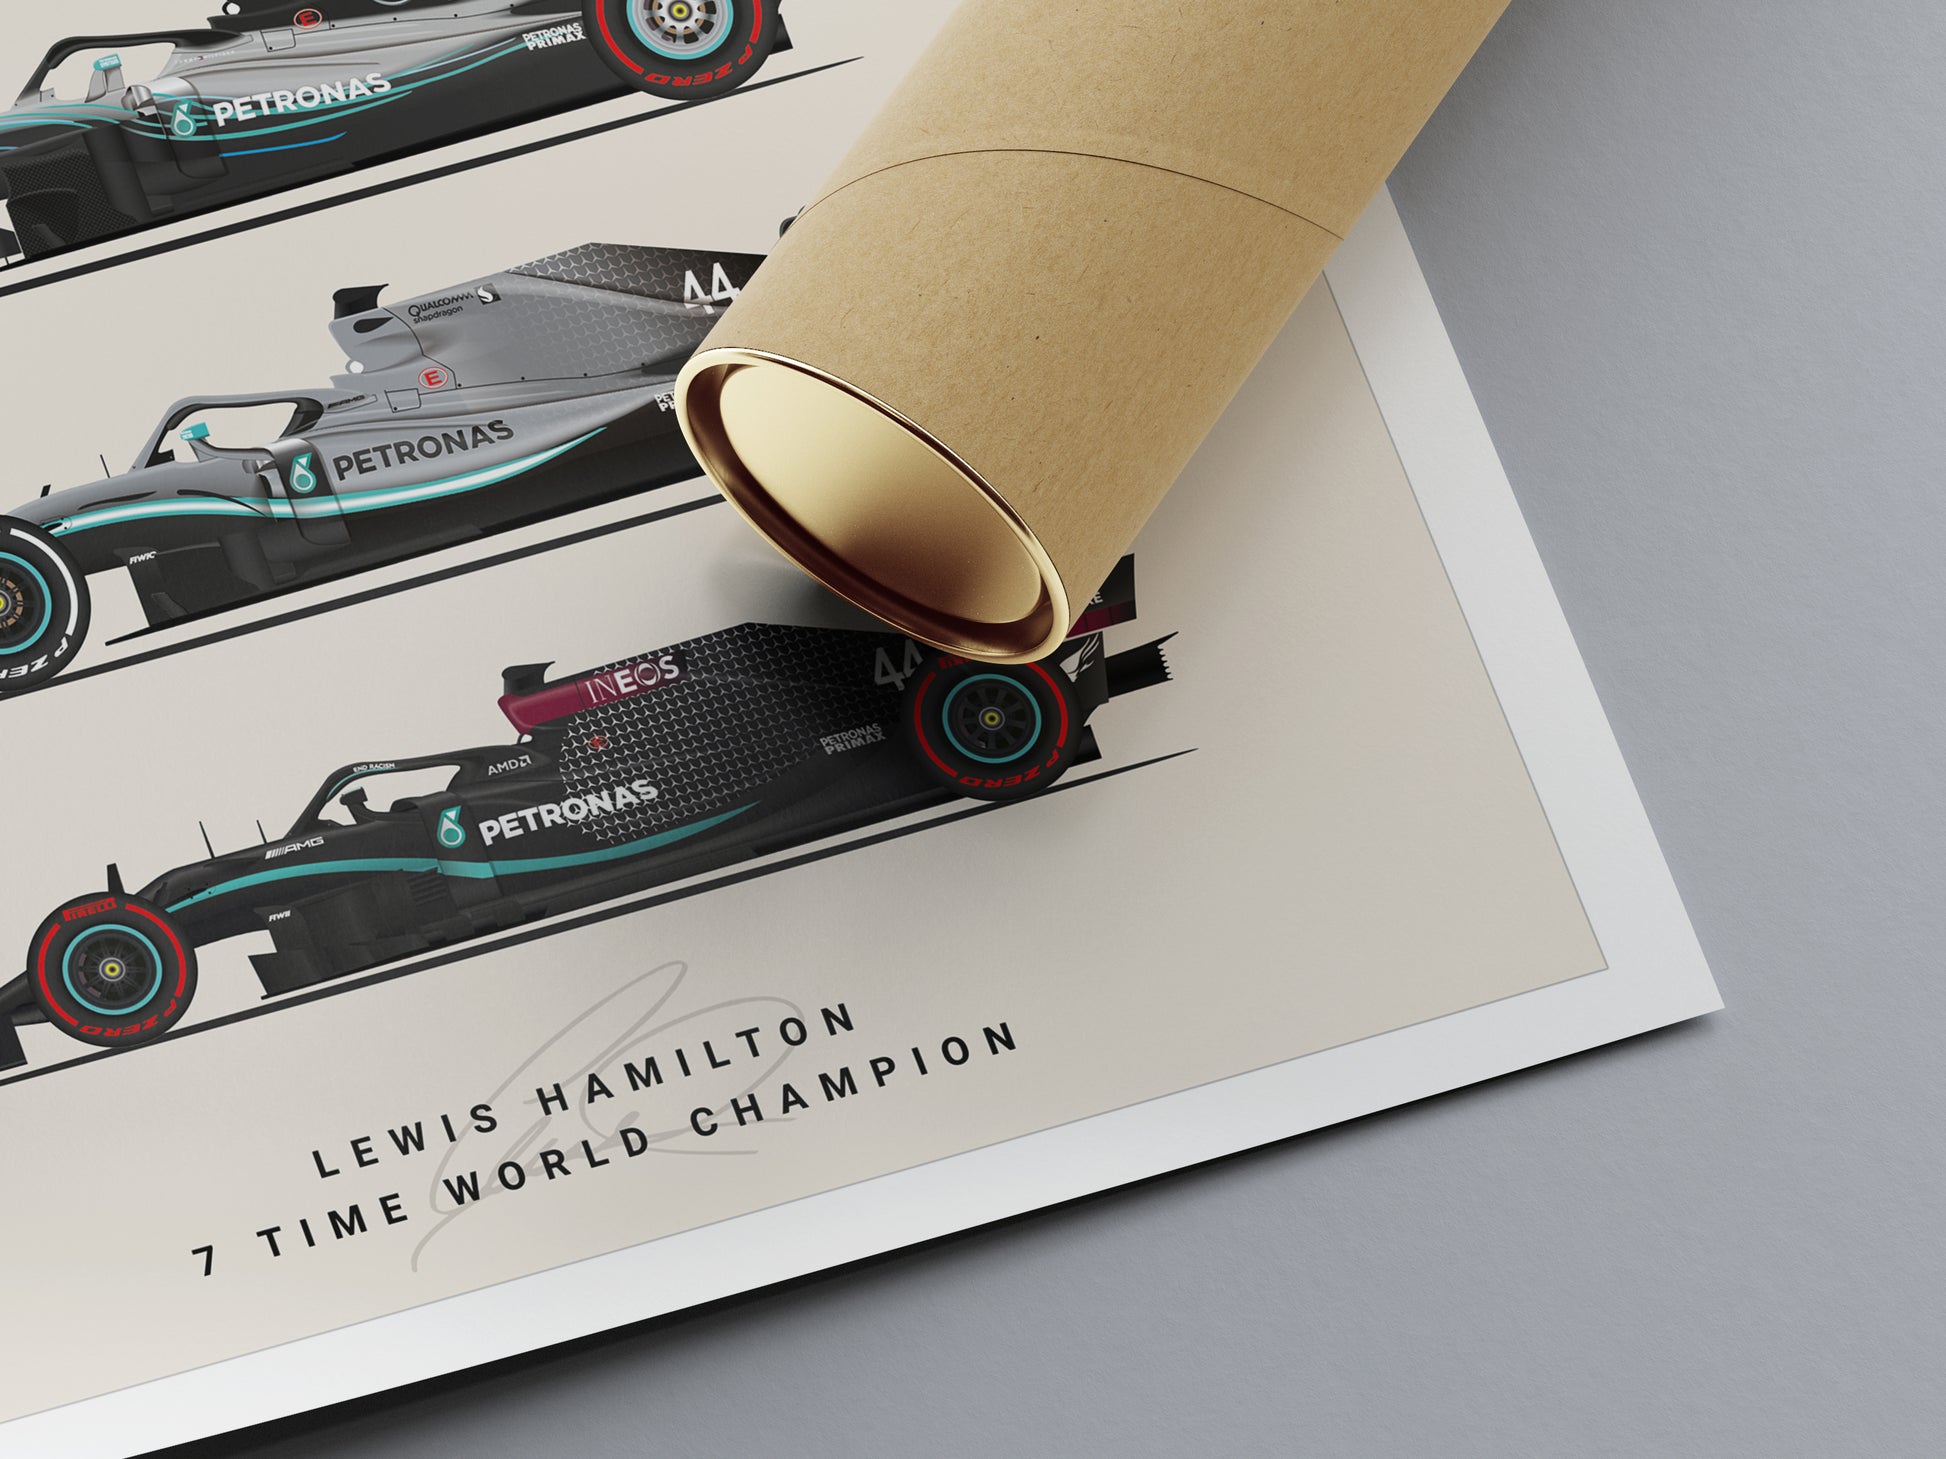 Lewis Hamilton F1 2021 Mercedes Car Design | Poster